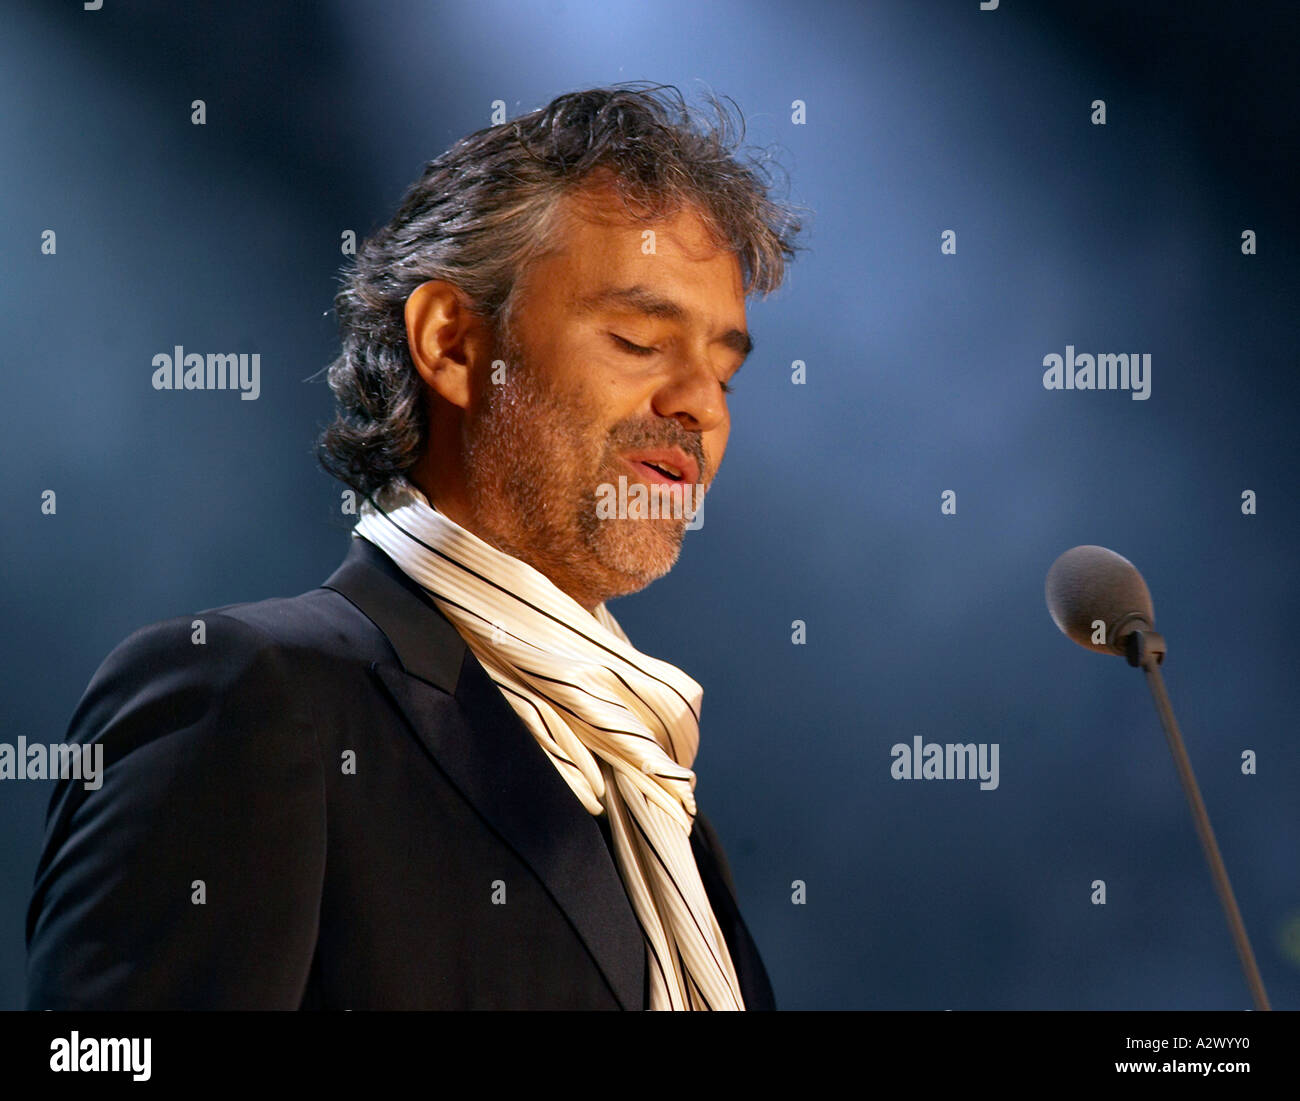 L'opéra italien star, Andrea Bocelli en concert Banque D'Images